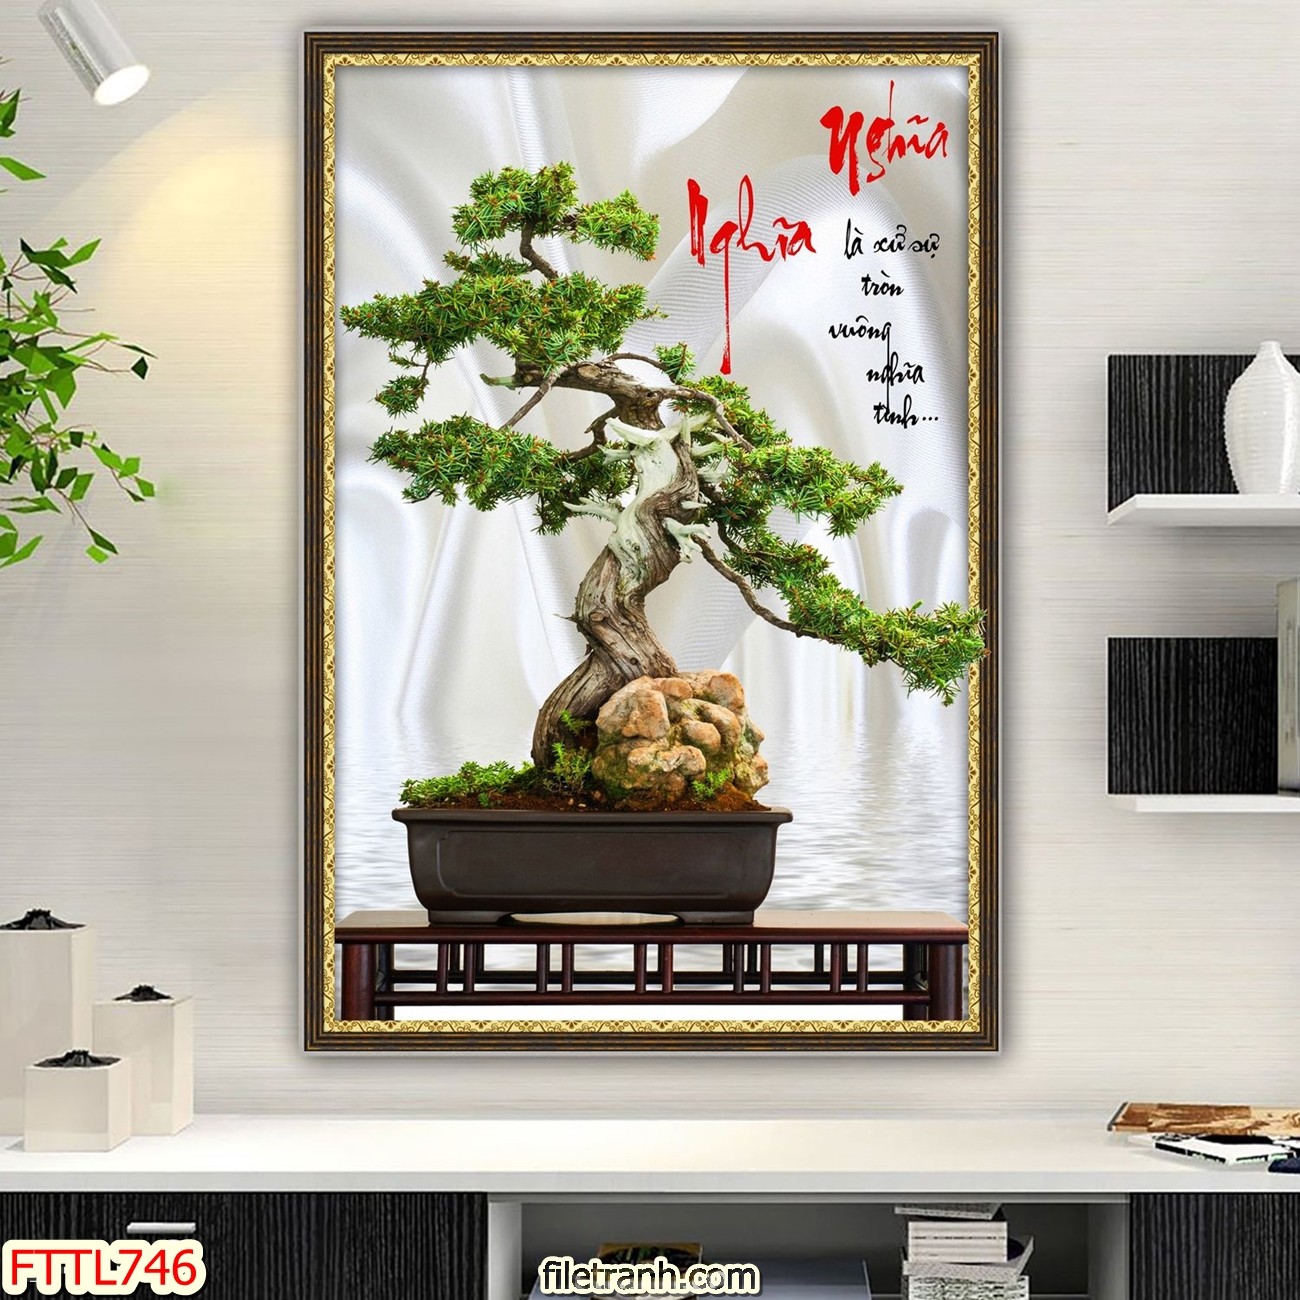 https://filetranh.com/file-tranh-chau-mai-bonsai/file-tranh-chau-mai-bonsai-fttl746.html